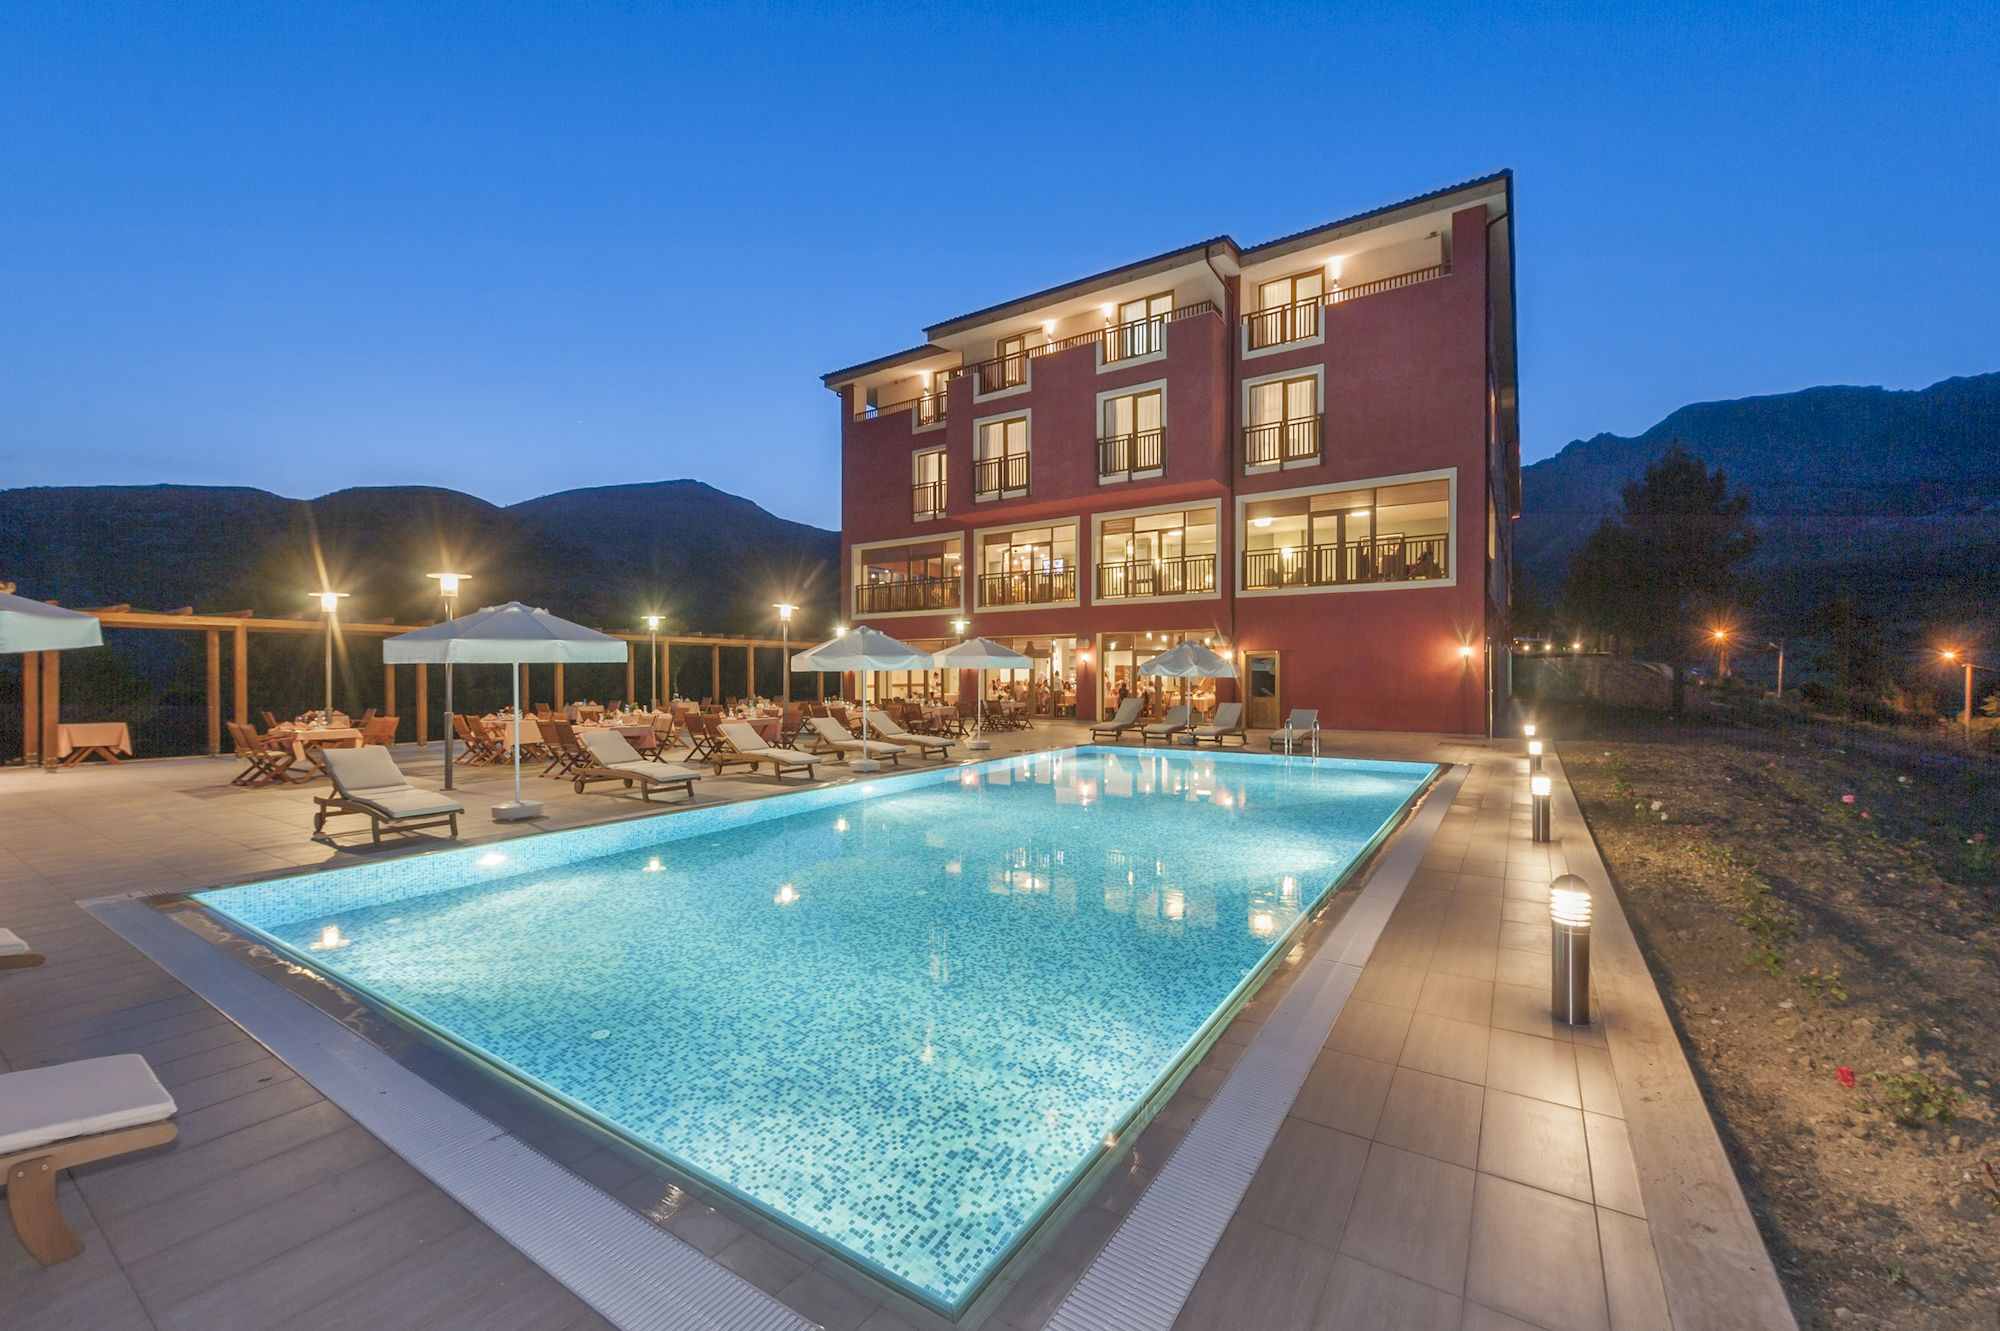 Sagalassos Lodge & Spa Hotel